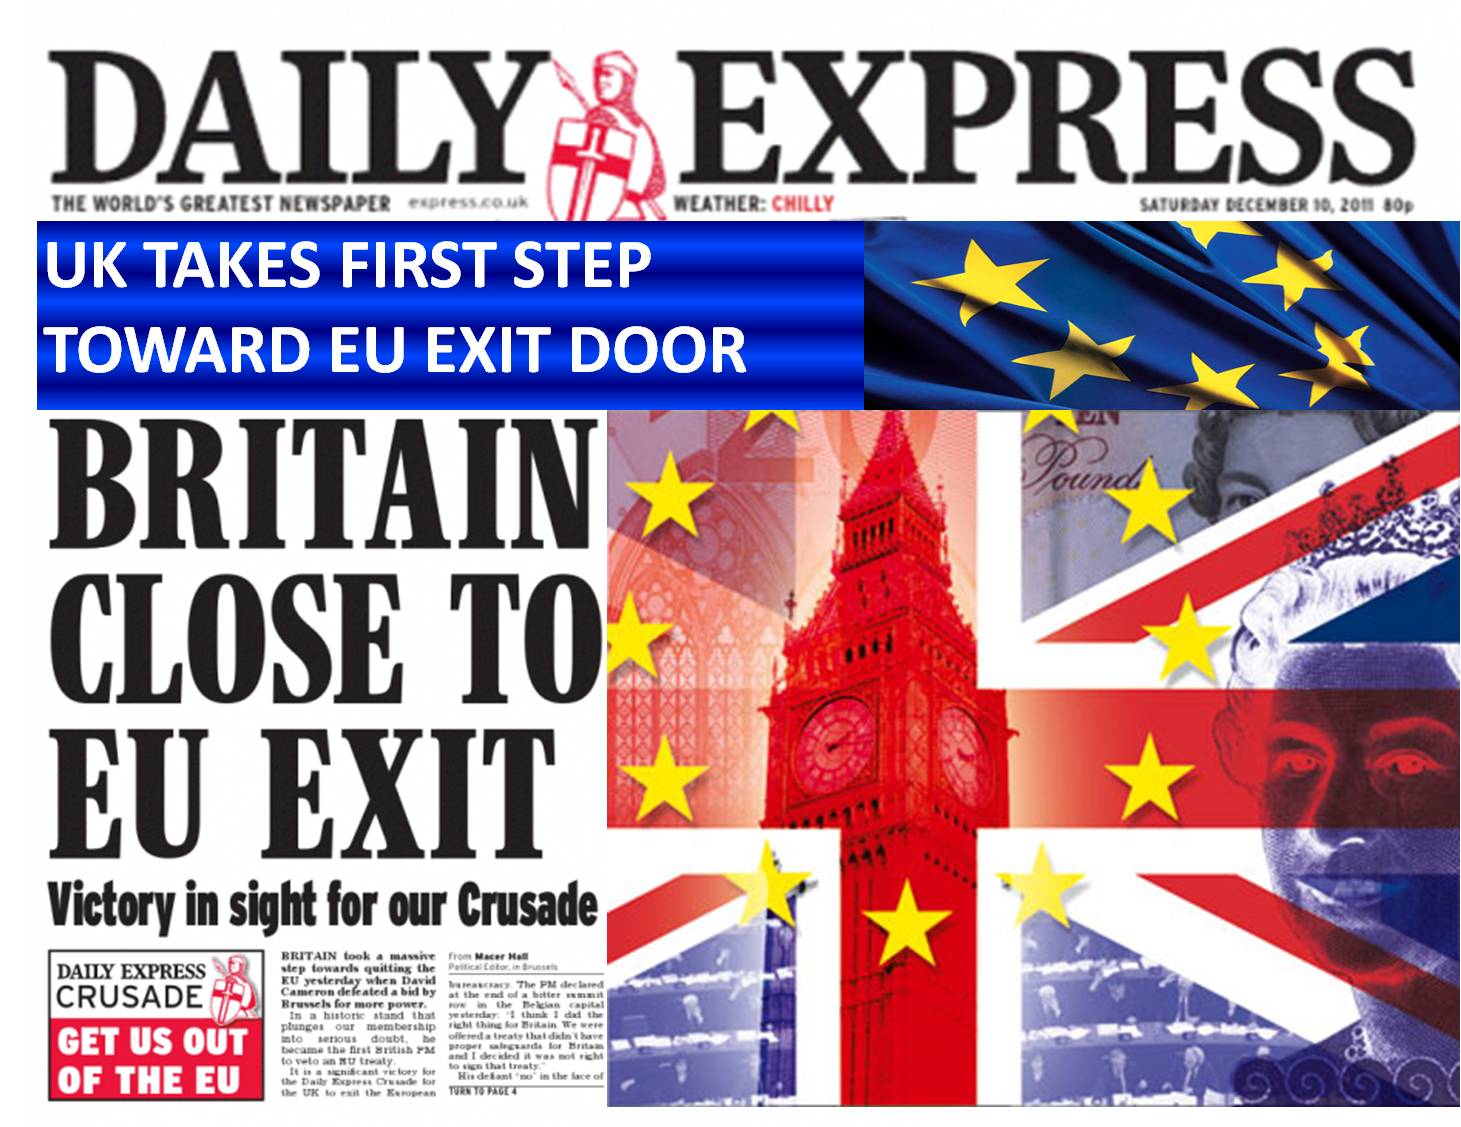 Britain Close to Leaving the European Union